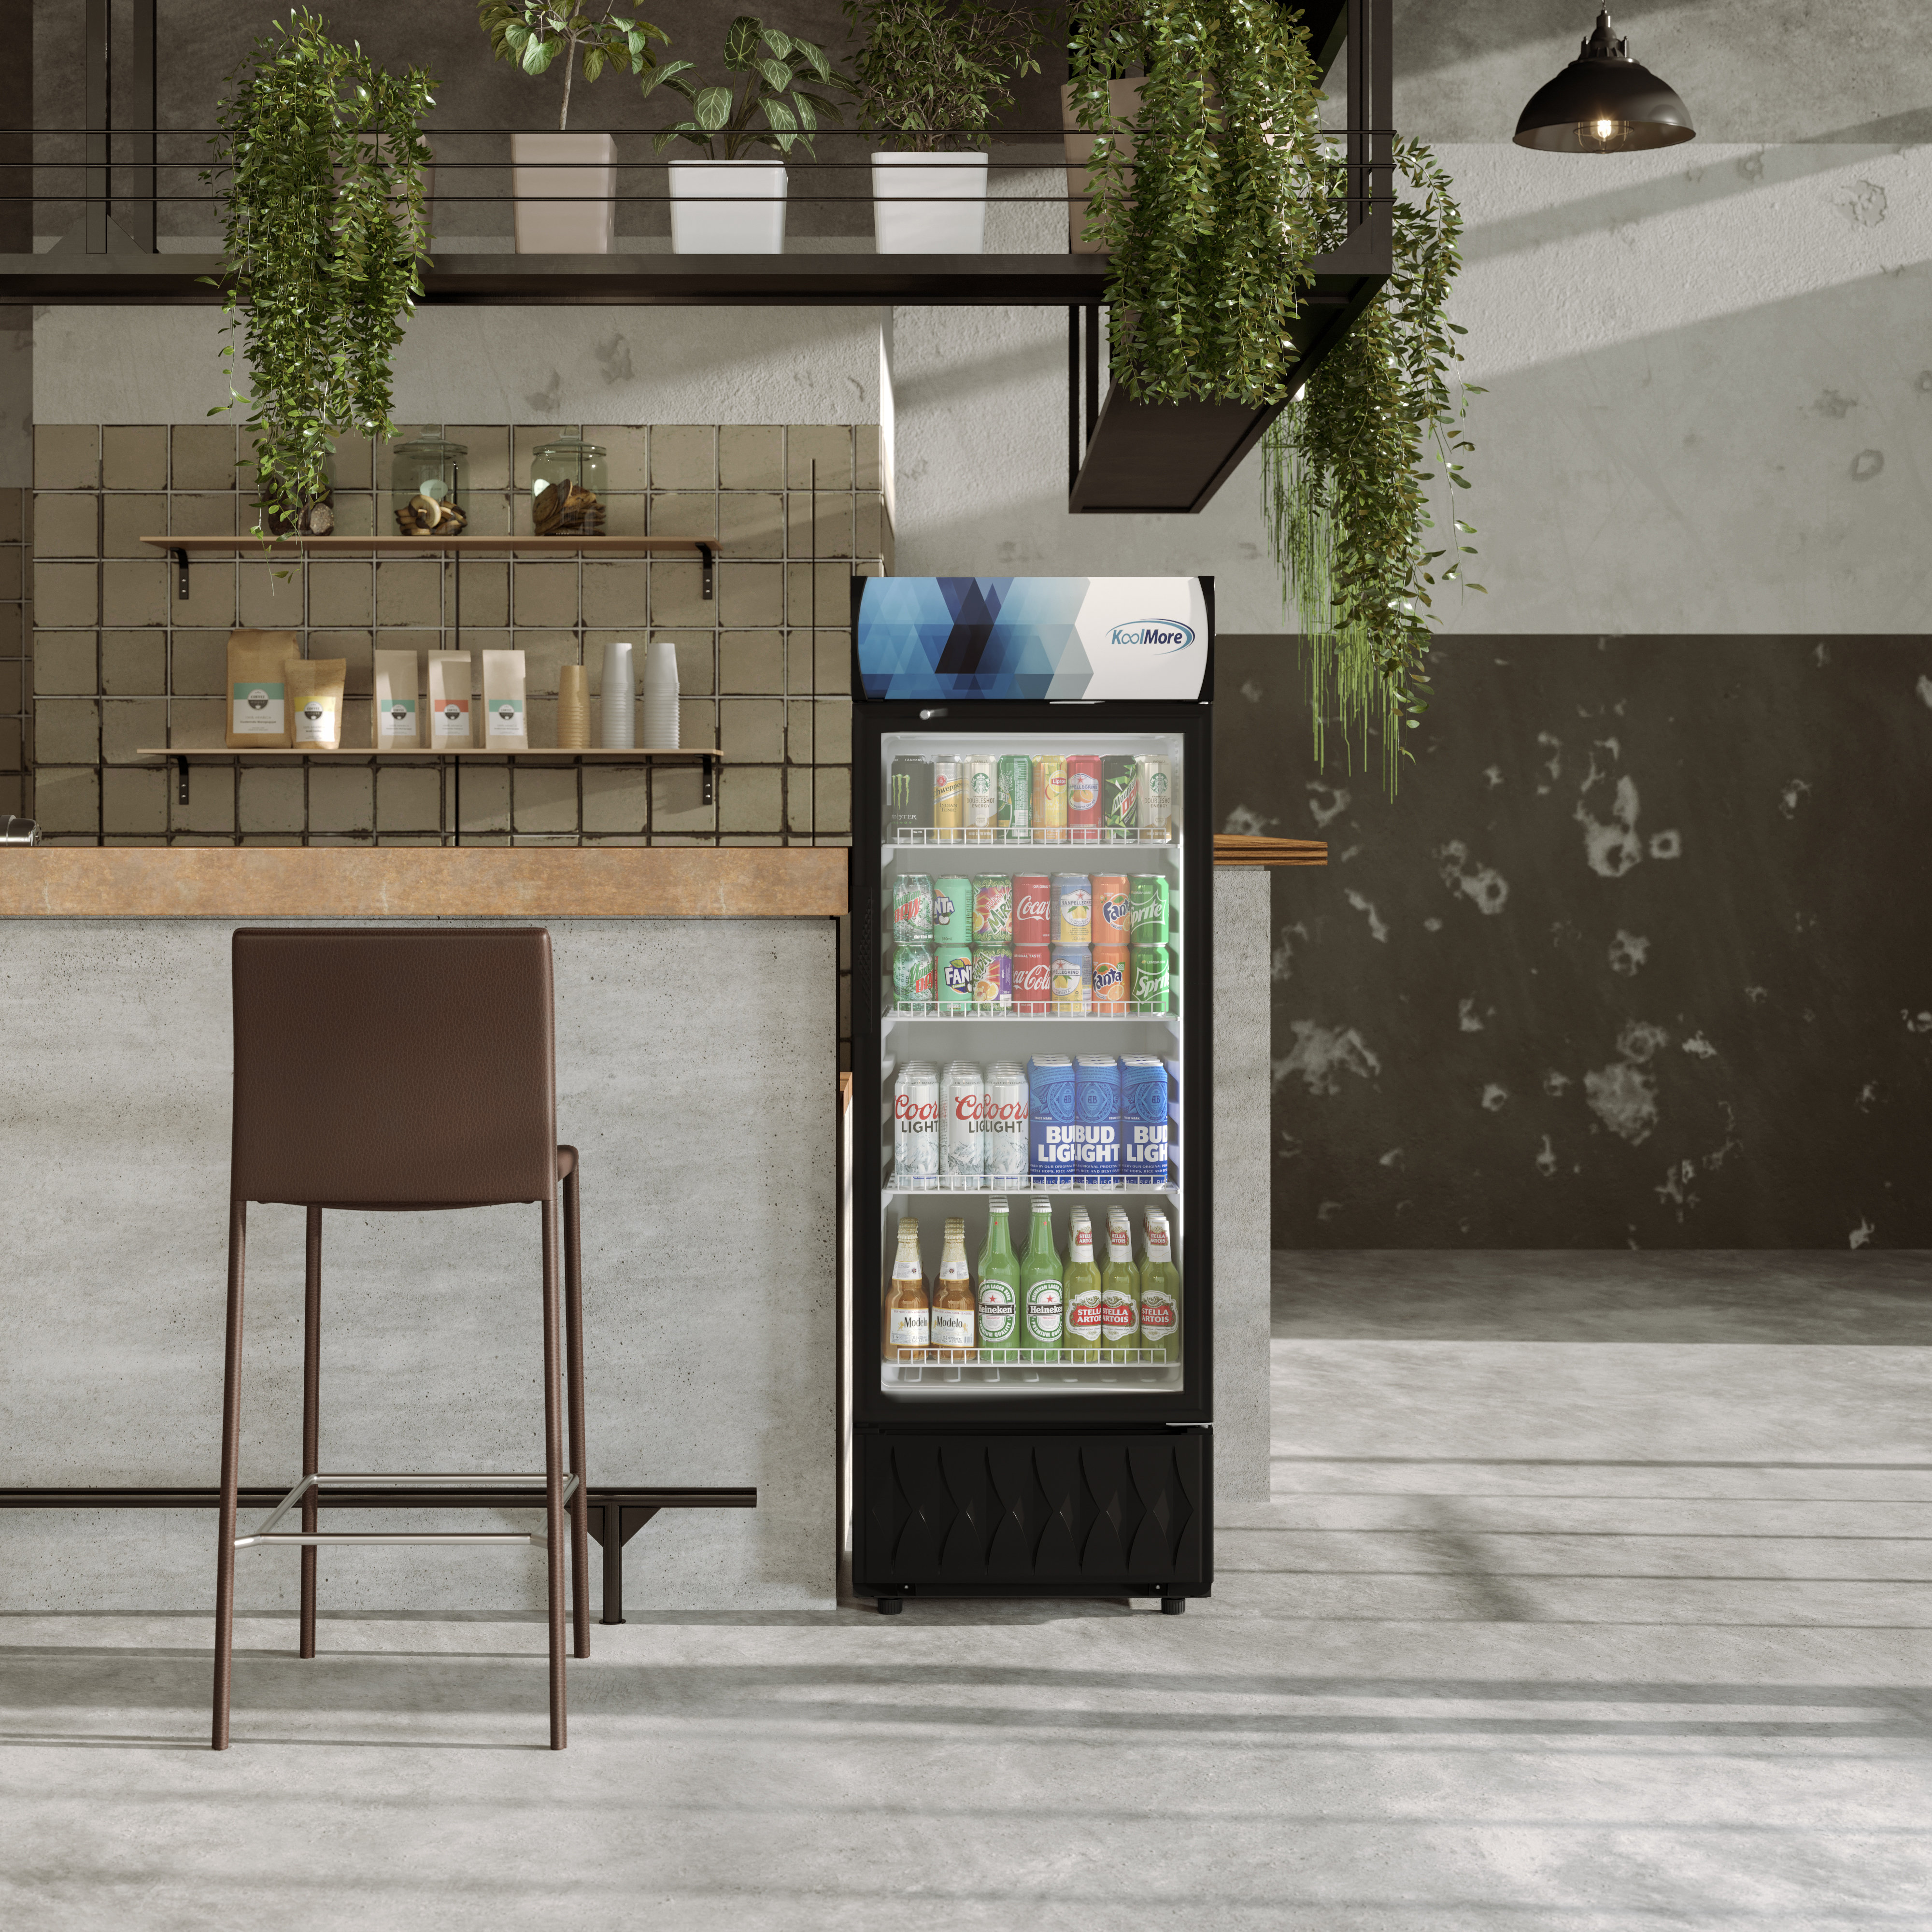 Koolmore 45 in. W 35 Cu. ft. Commercial Upright Display Refrigerator with 2 Swing Glass Door Beverage Cooler in Black